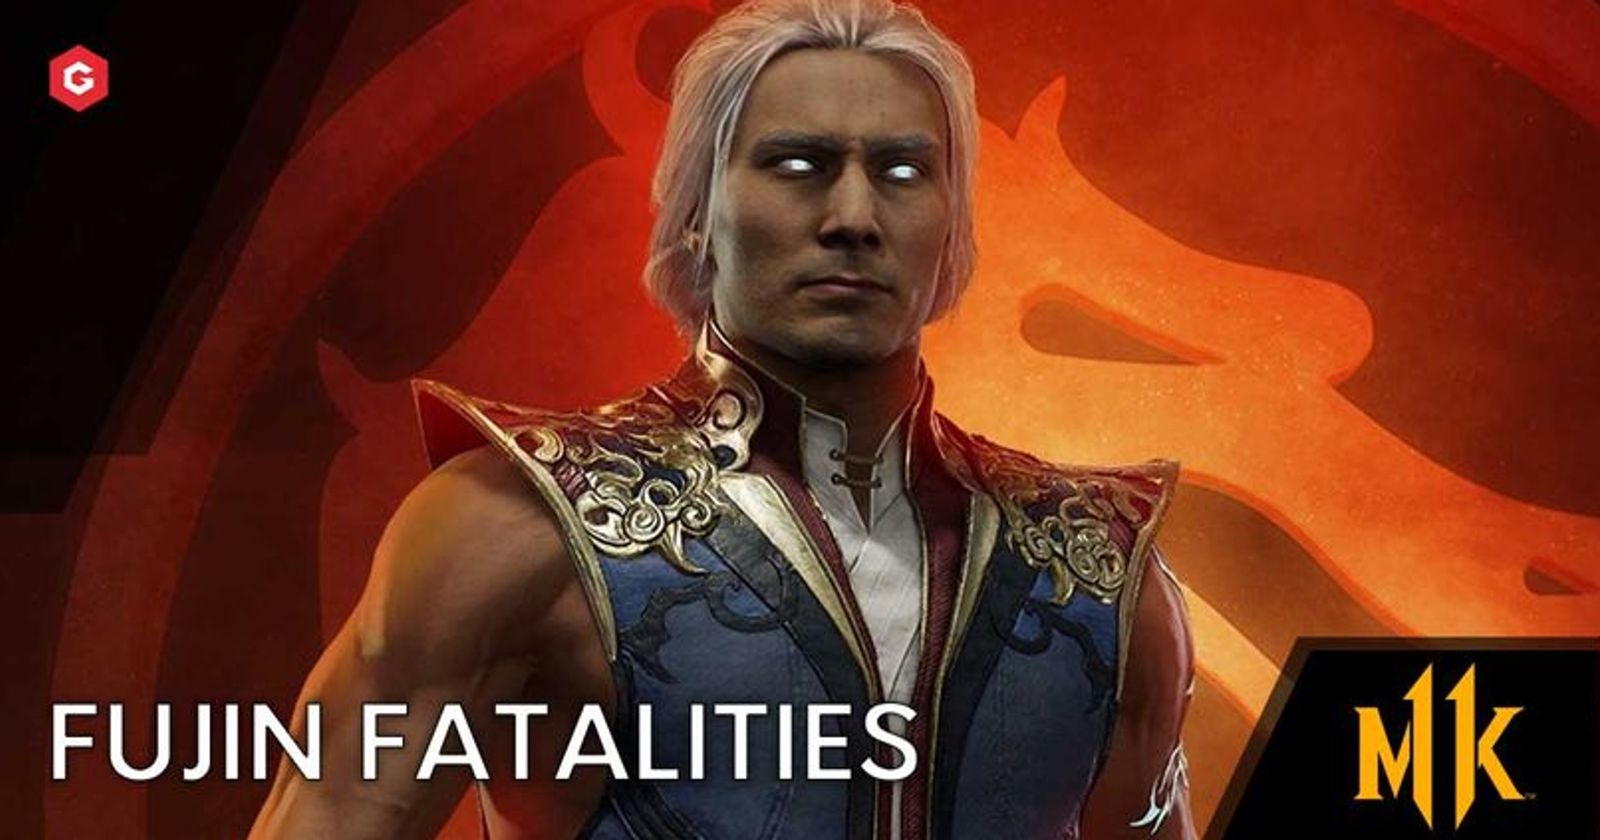 Mortal Kombat 11 Shang Tsung Fatality Inputs: How To Do MK11 Shang Tsung  Fatalities